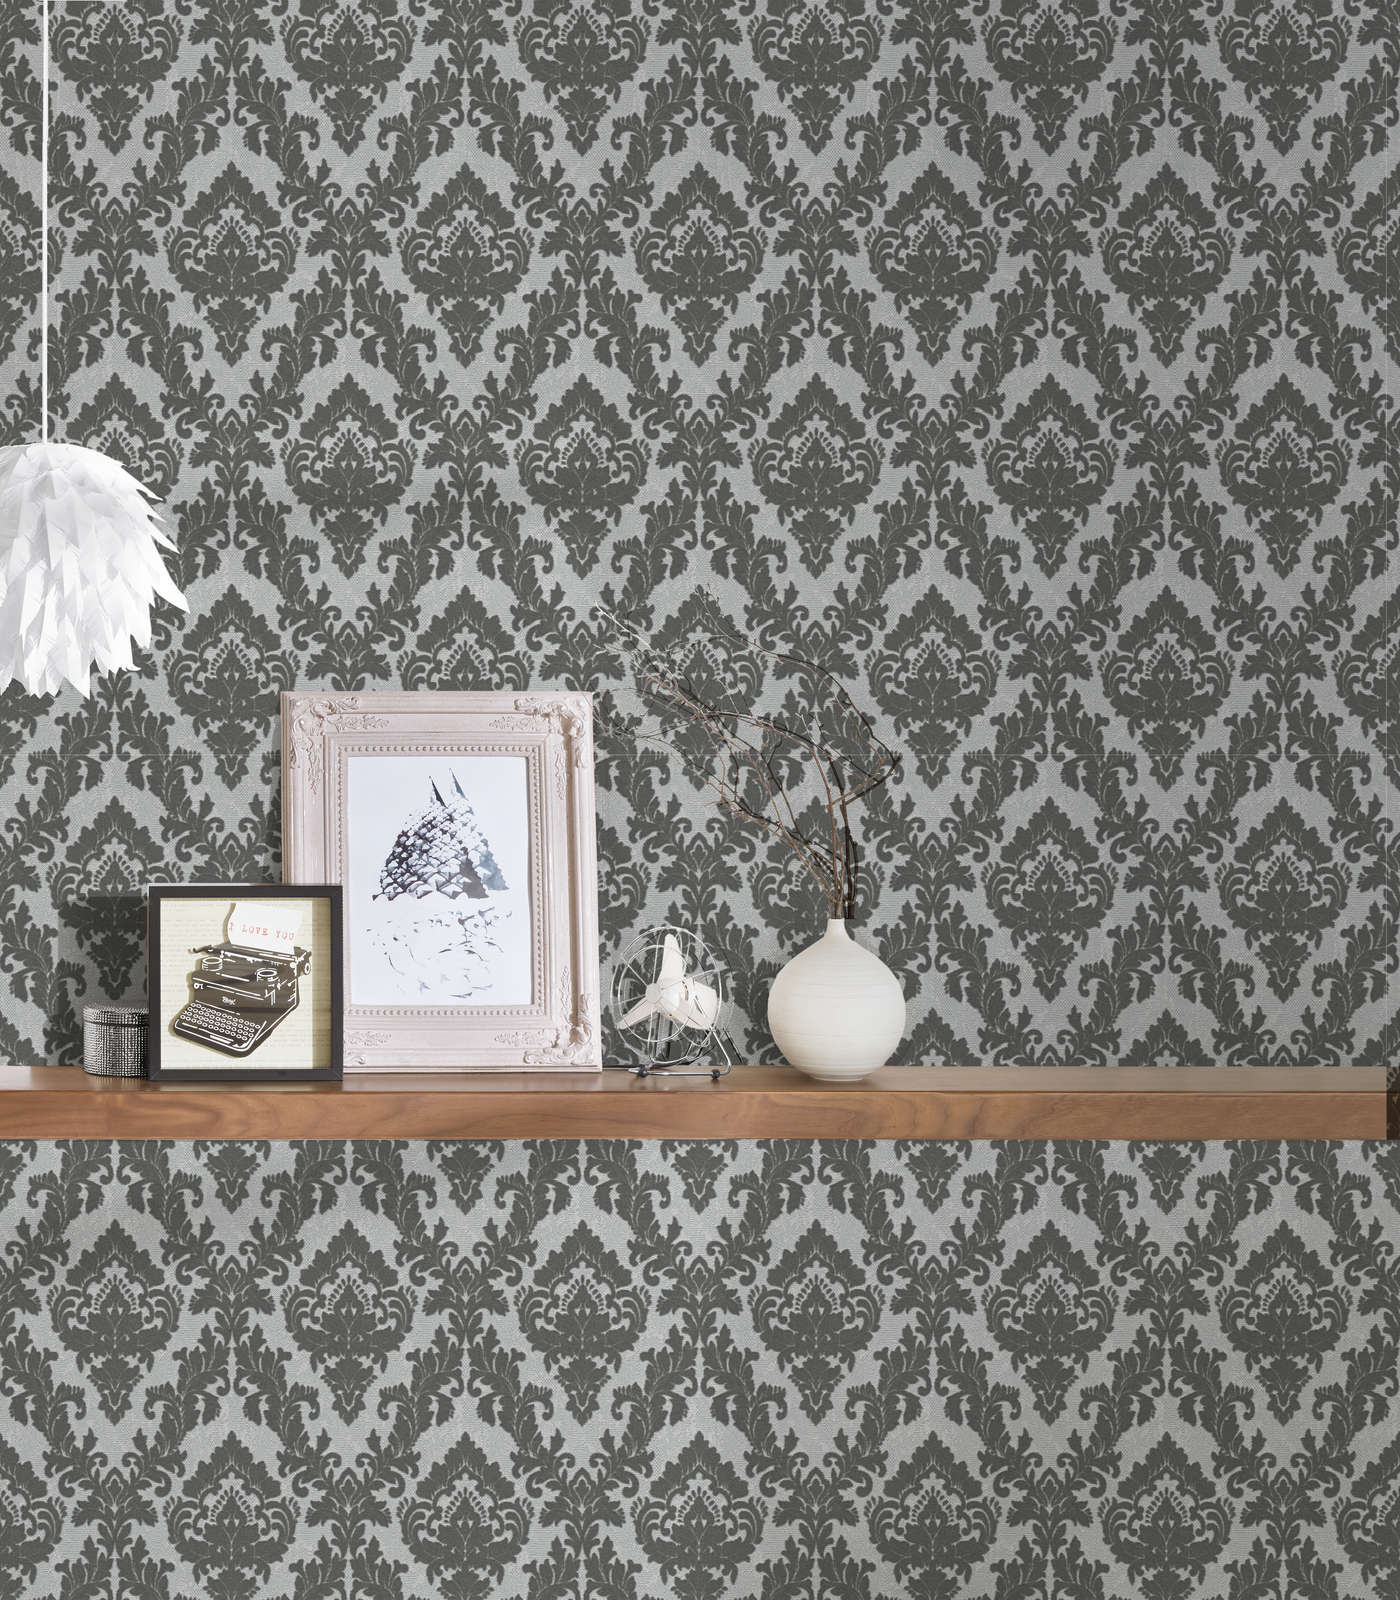             Ornament wallpaper with flock & silk gloss - grey
        